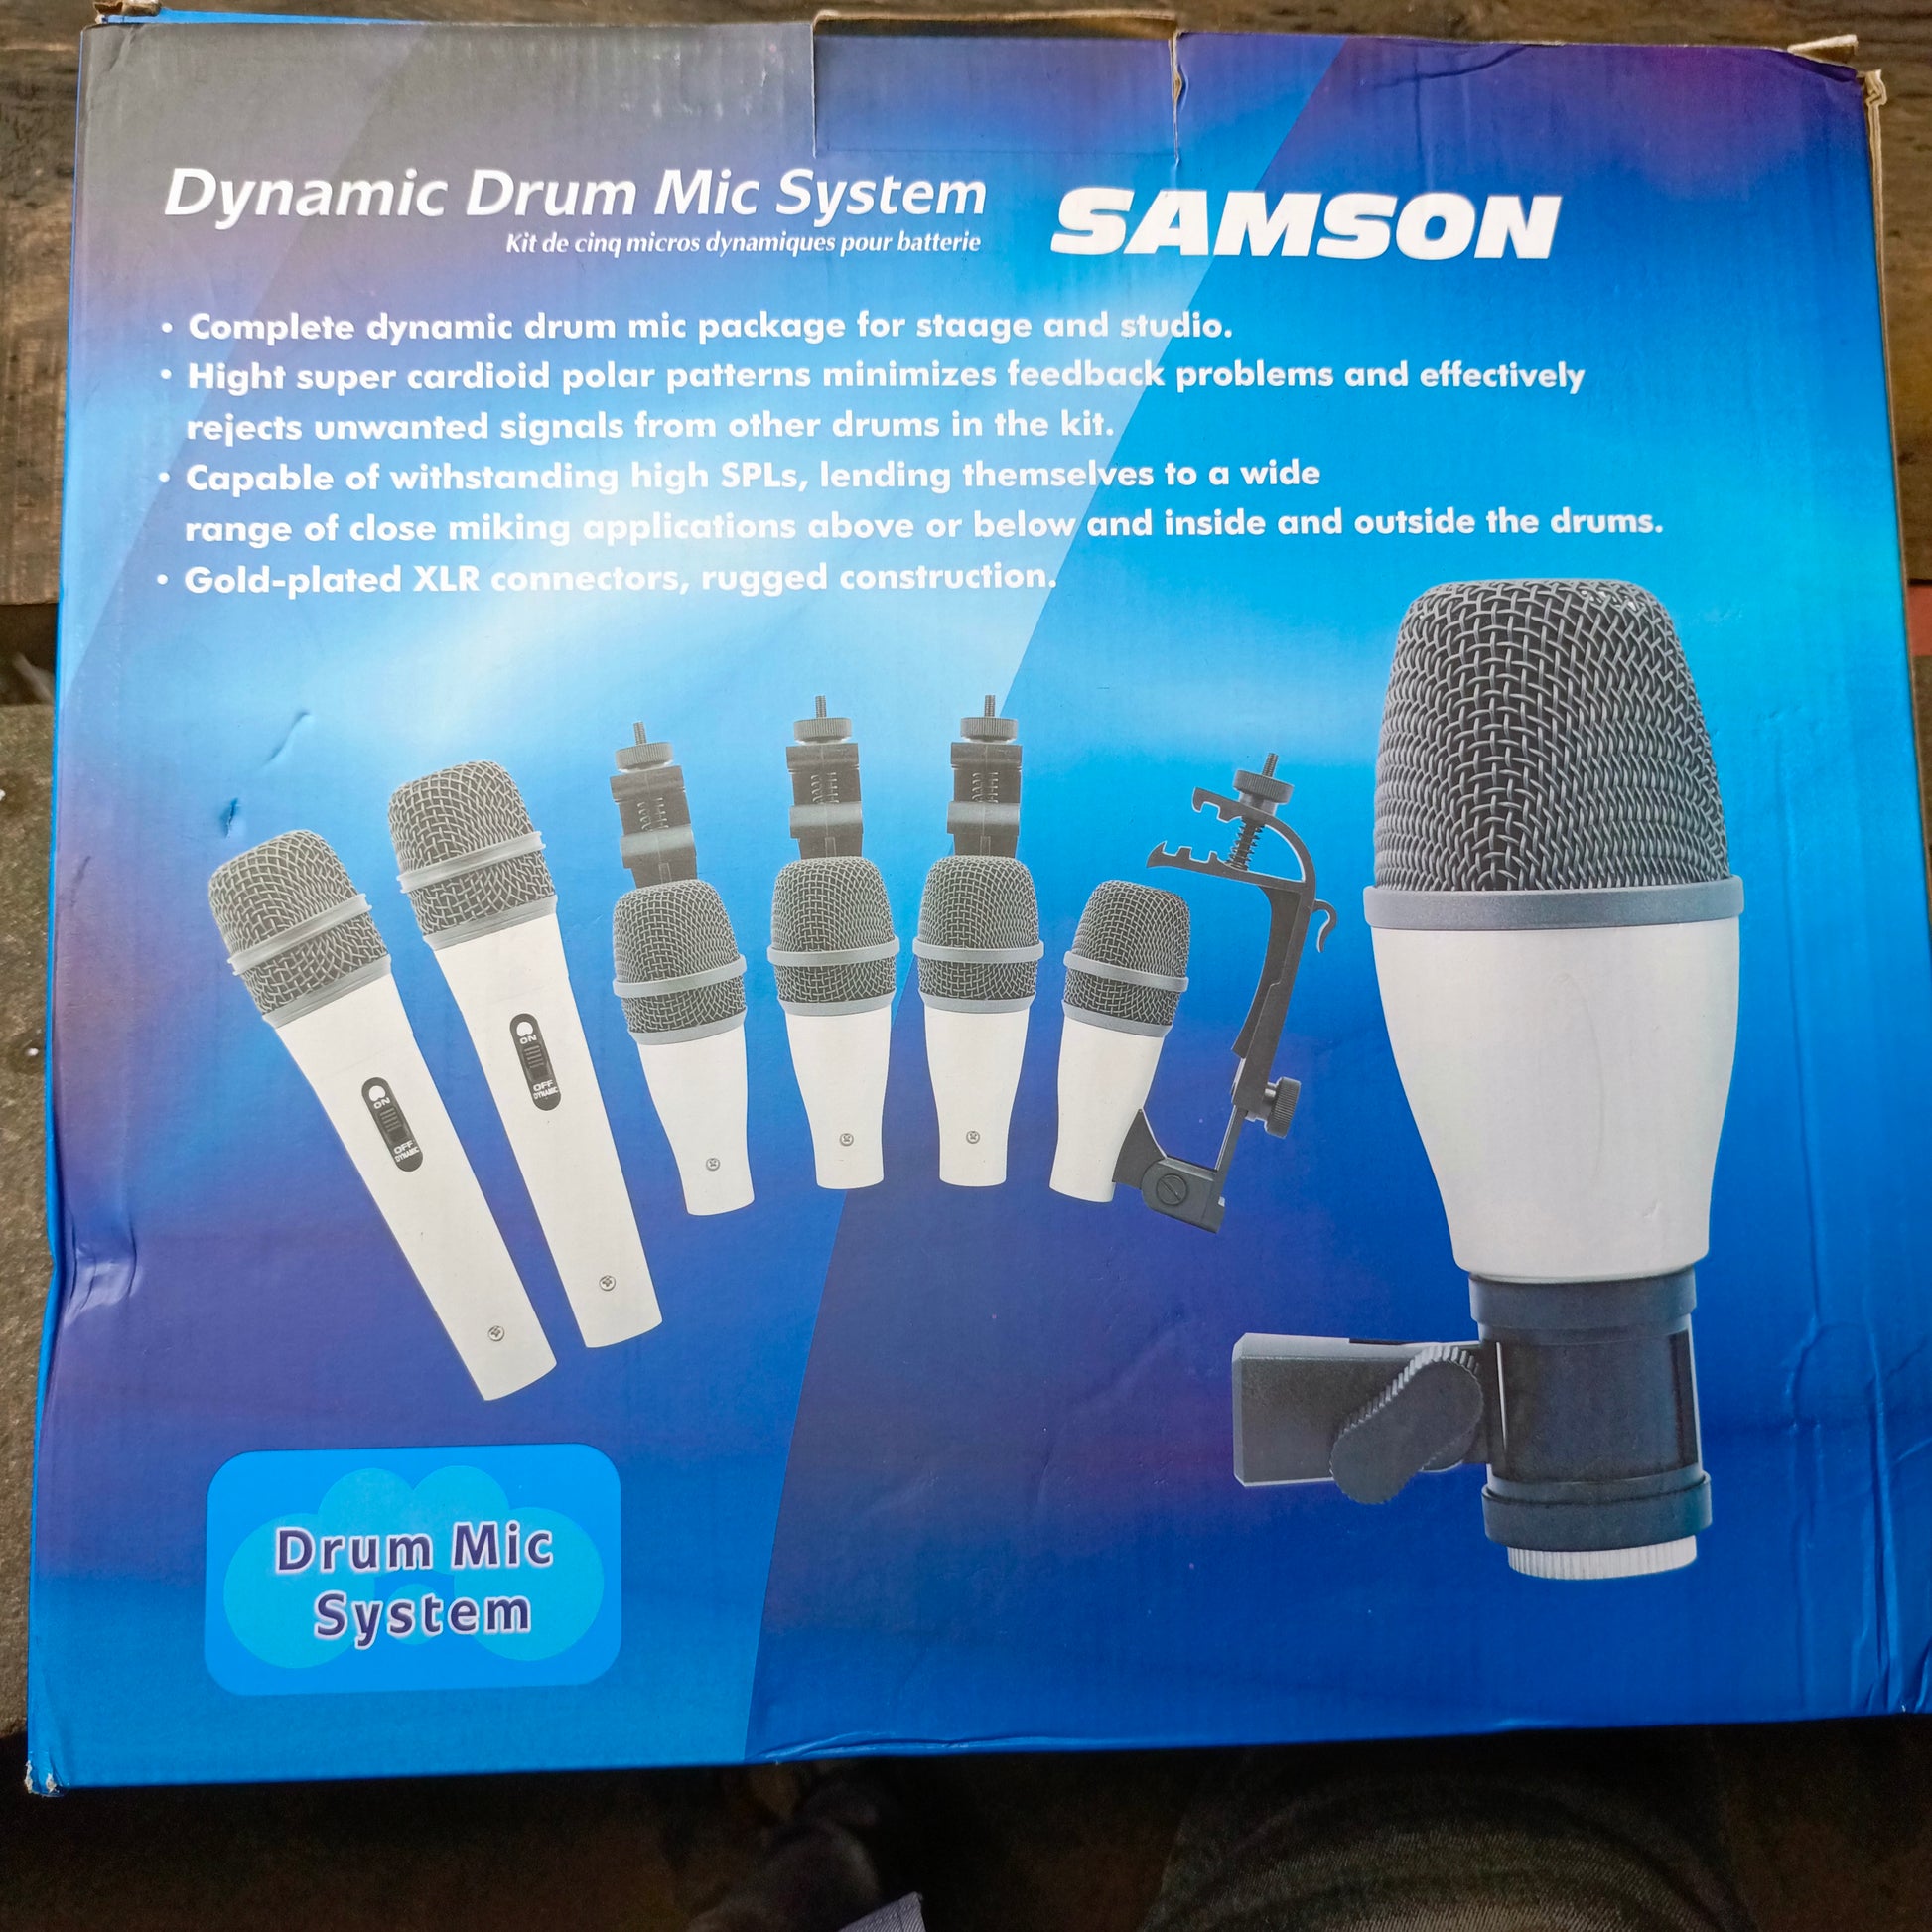 Takstar DMS-D7 Drum Microphone Set 7